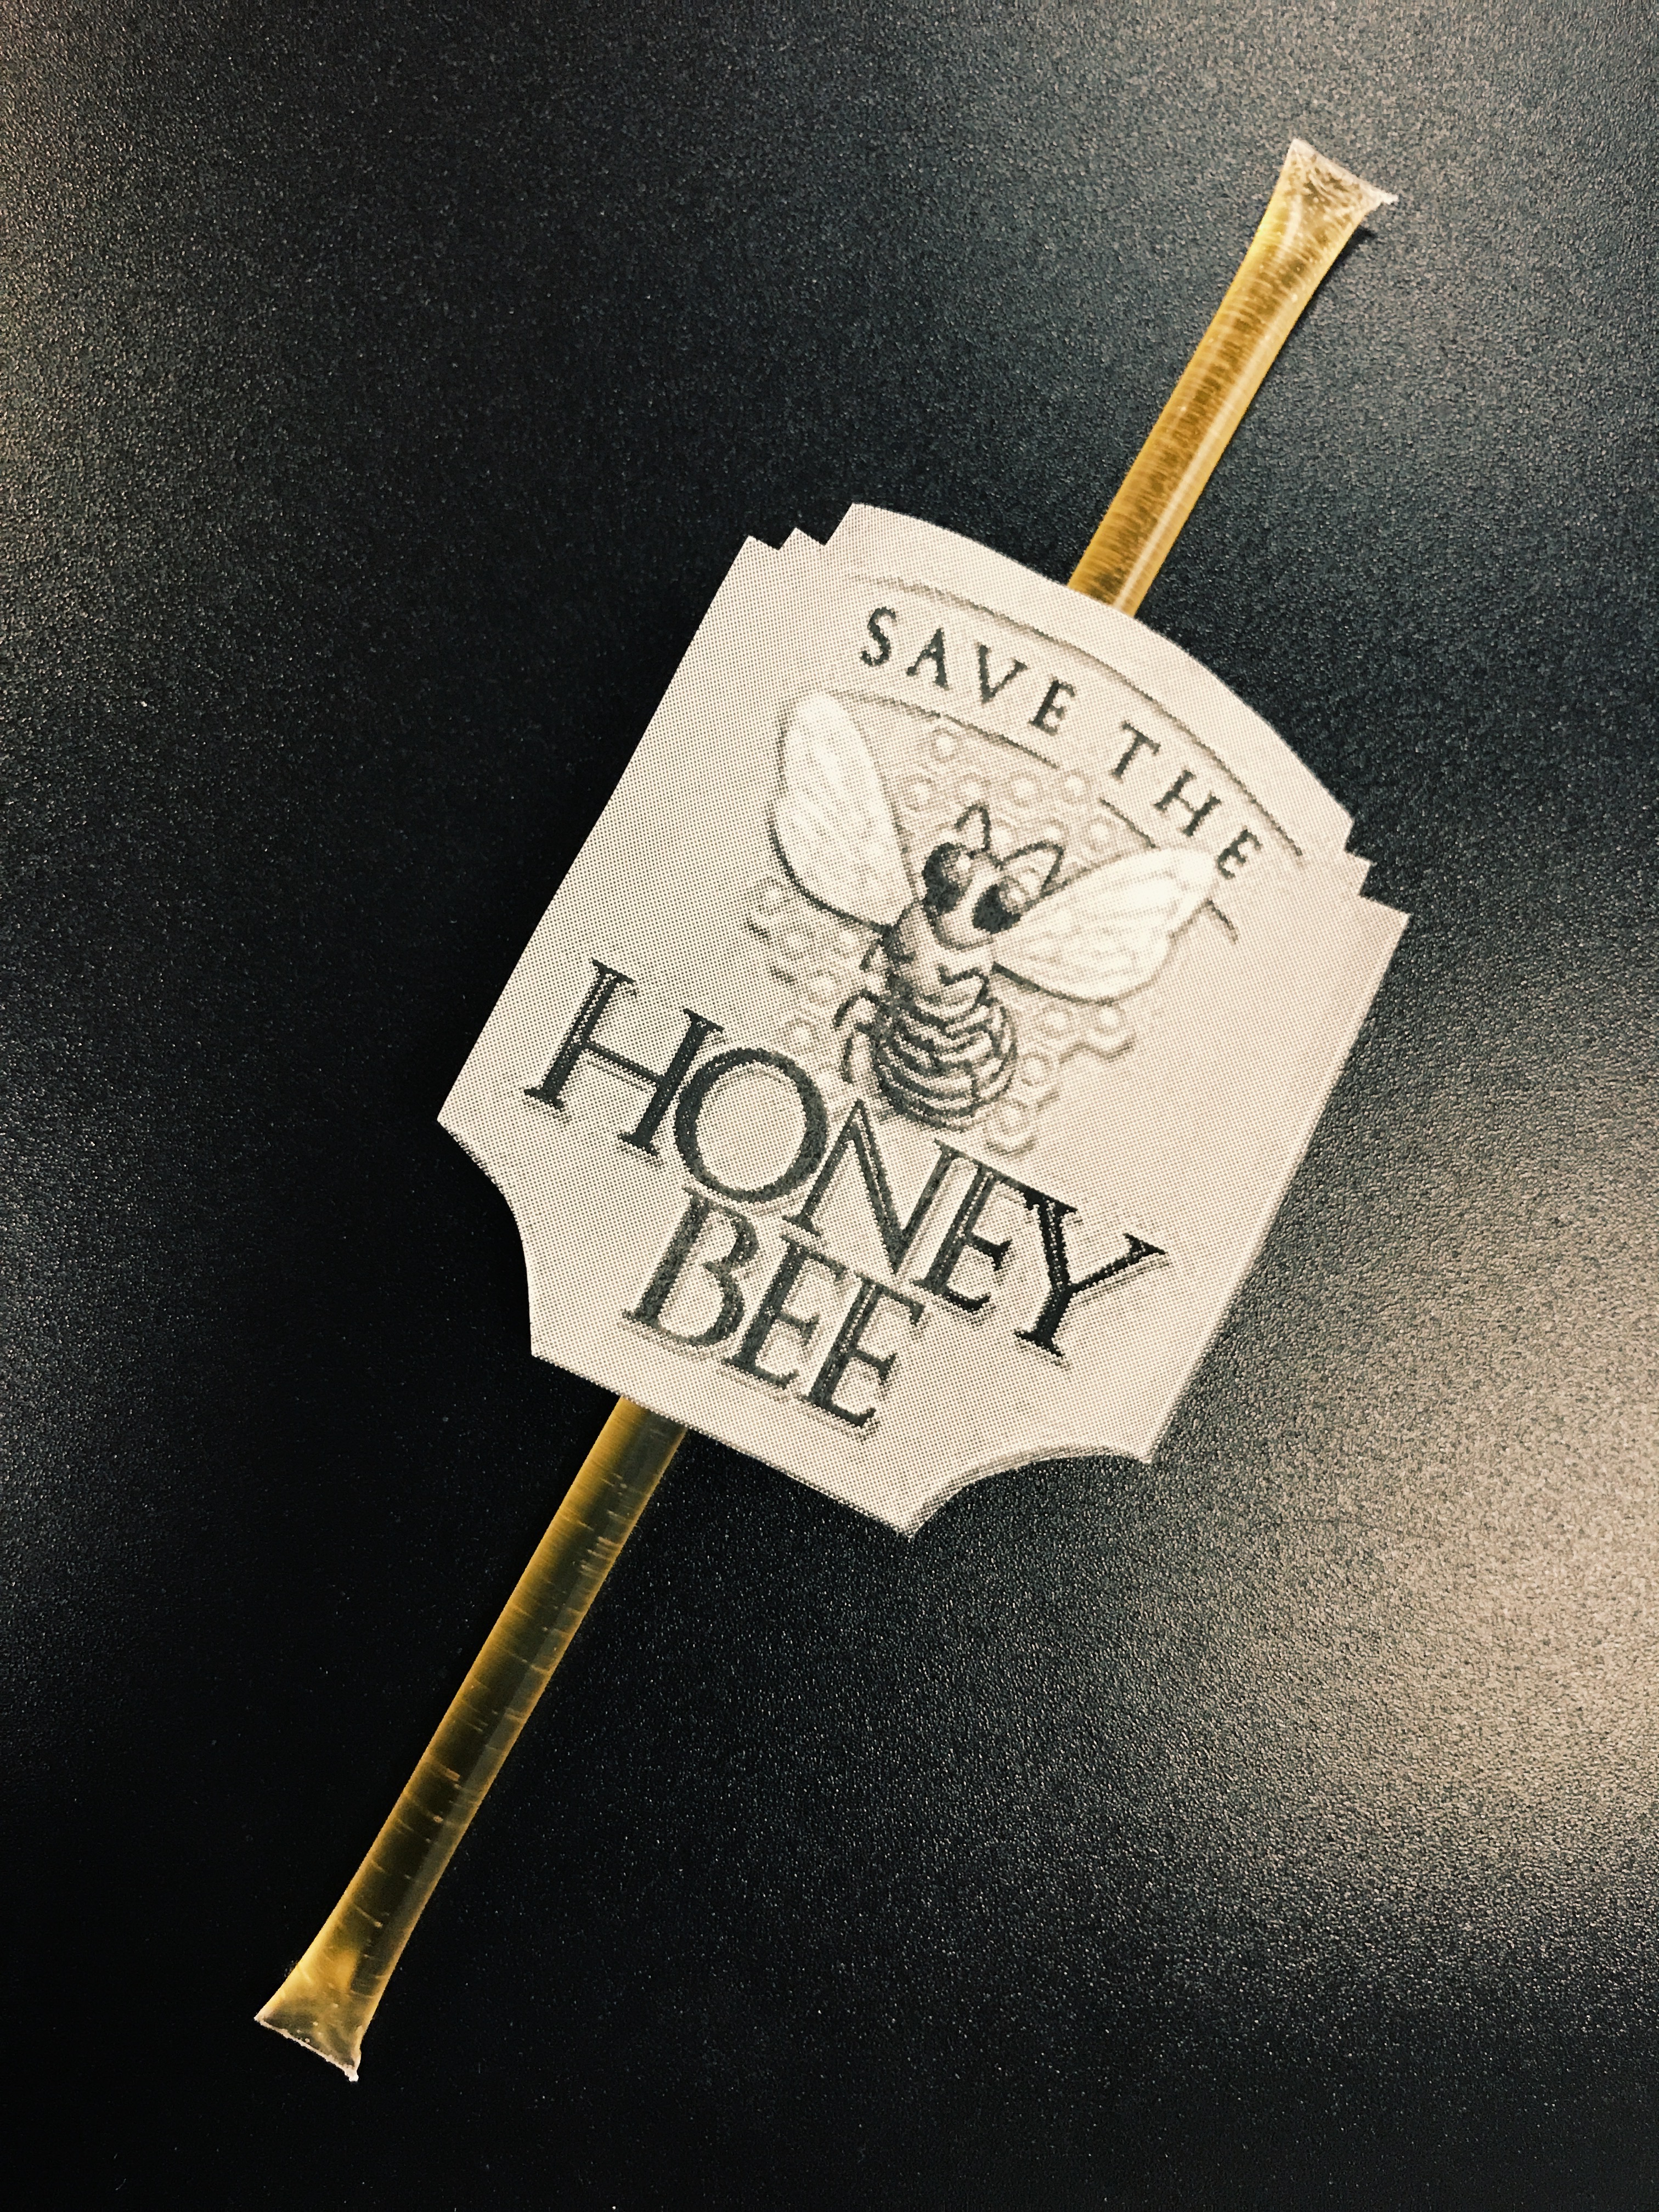 Phoenix Public Speaking visual aids save the honey bees